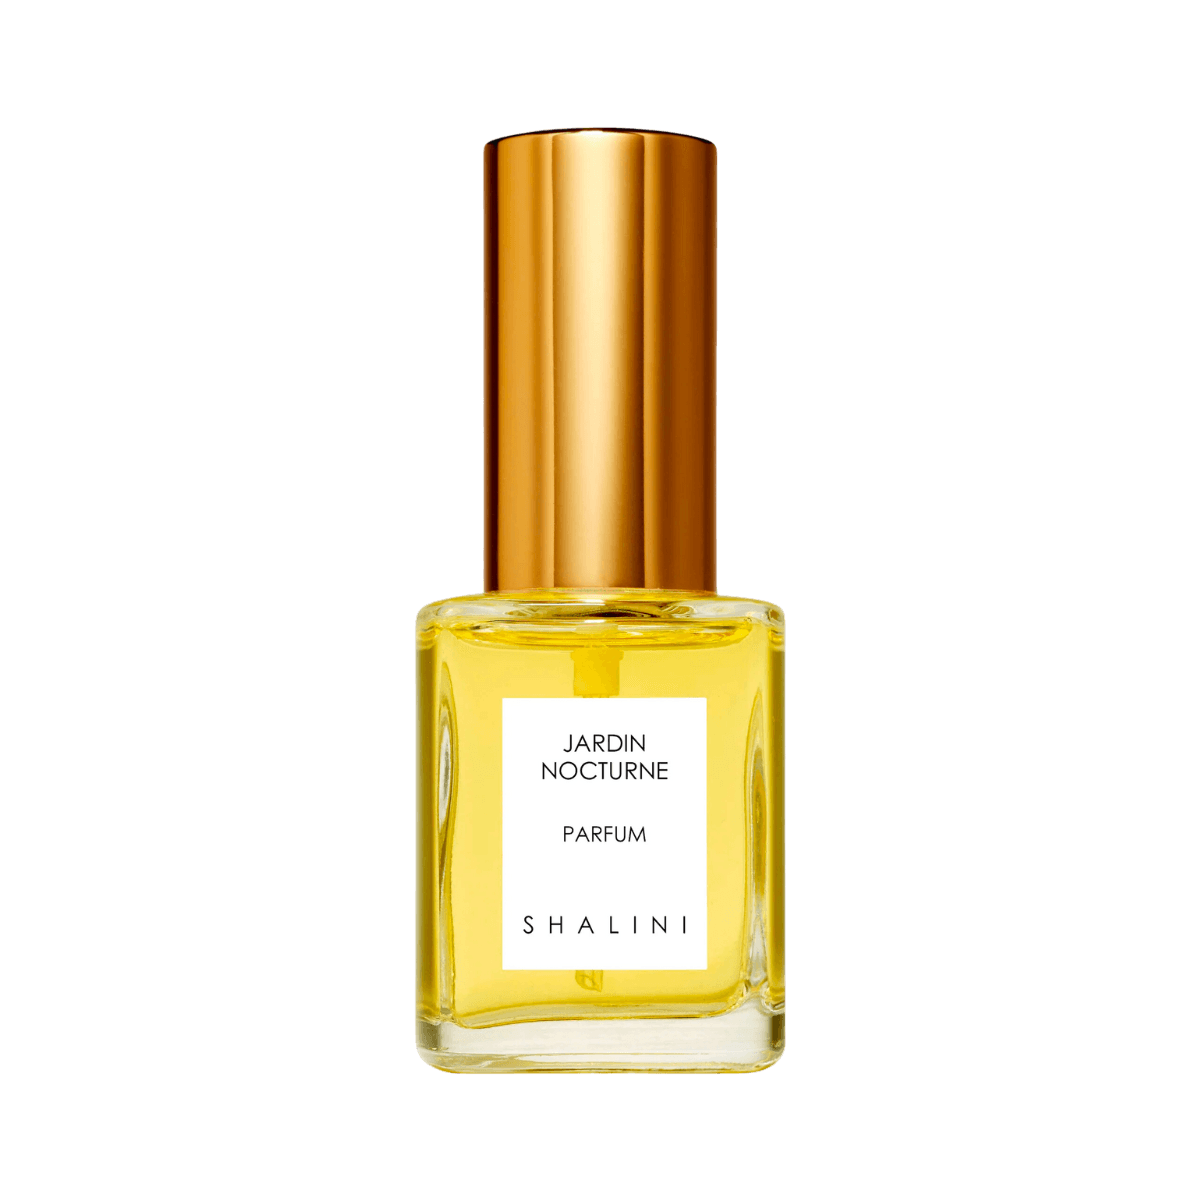 Image of Jardin Nocturne extrait de parfum by the perfume brand Shalini